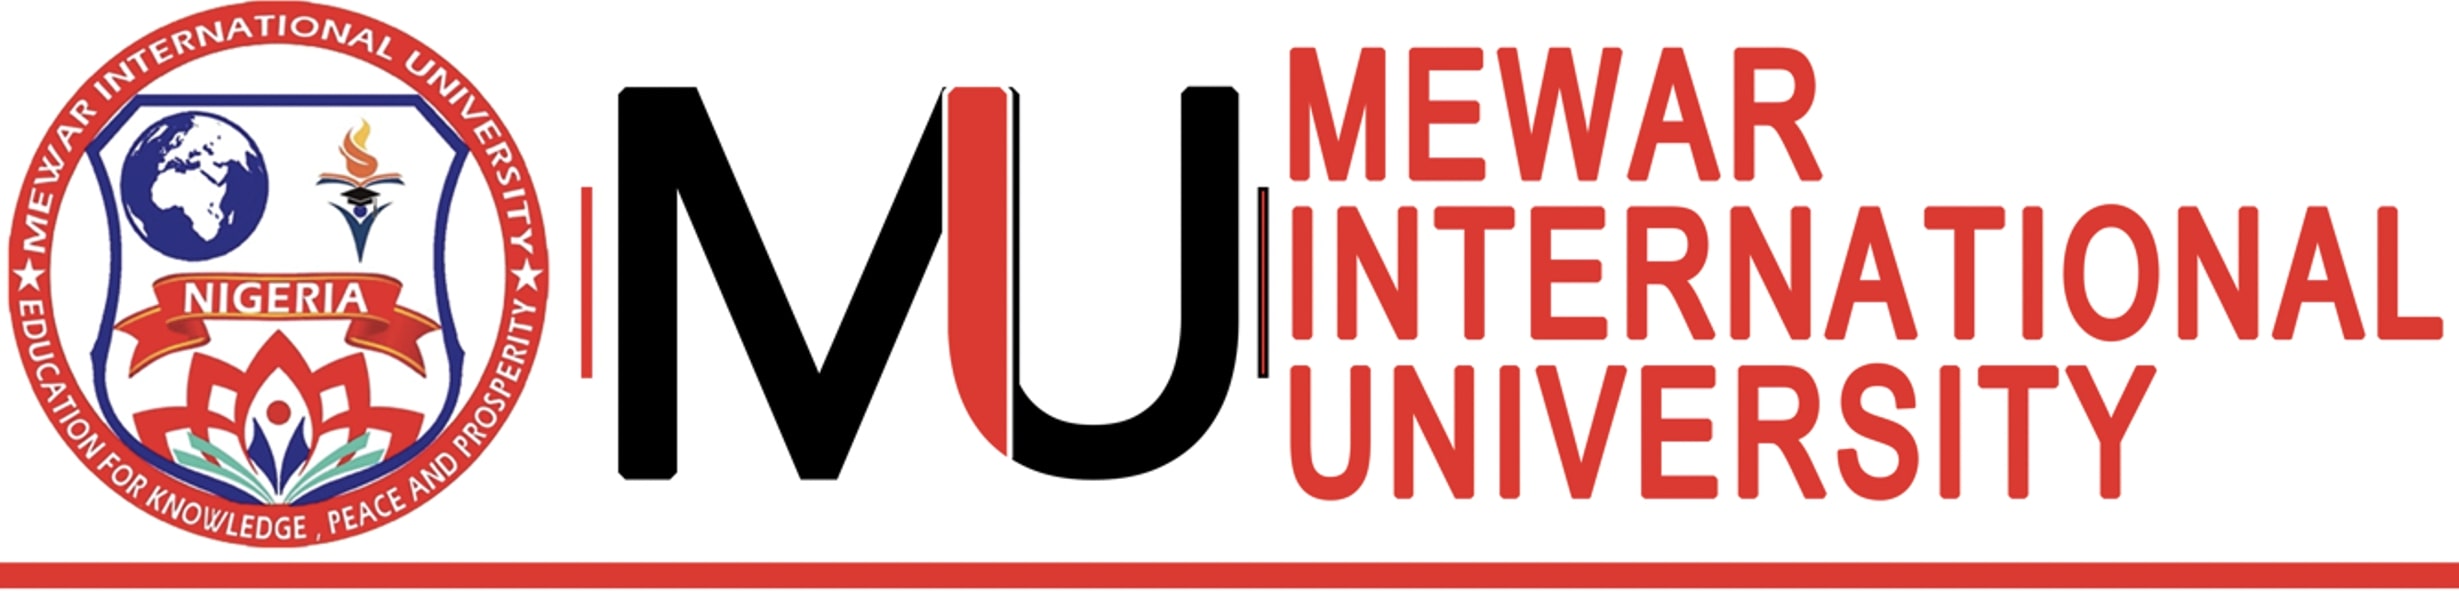 mewar international university logo